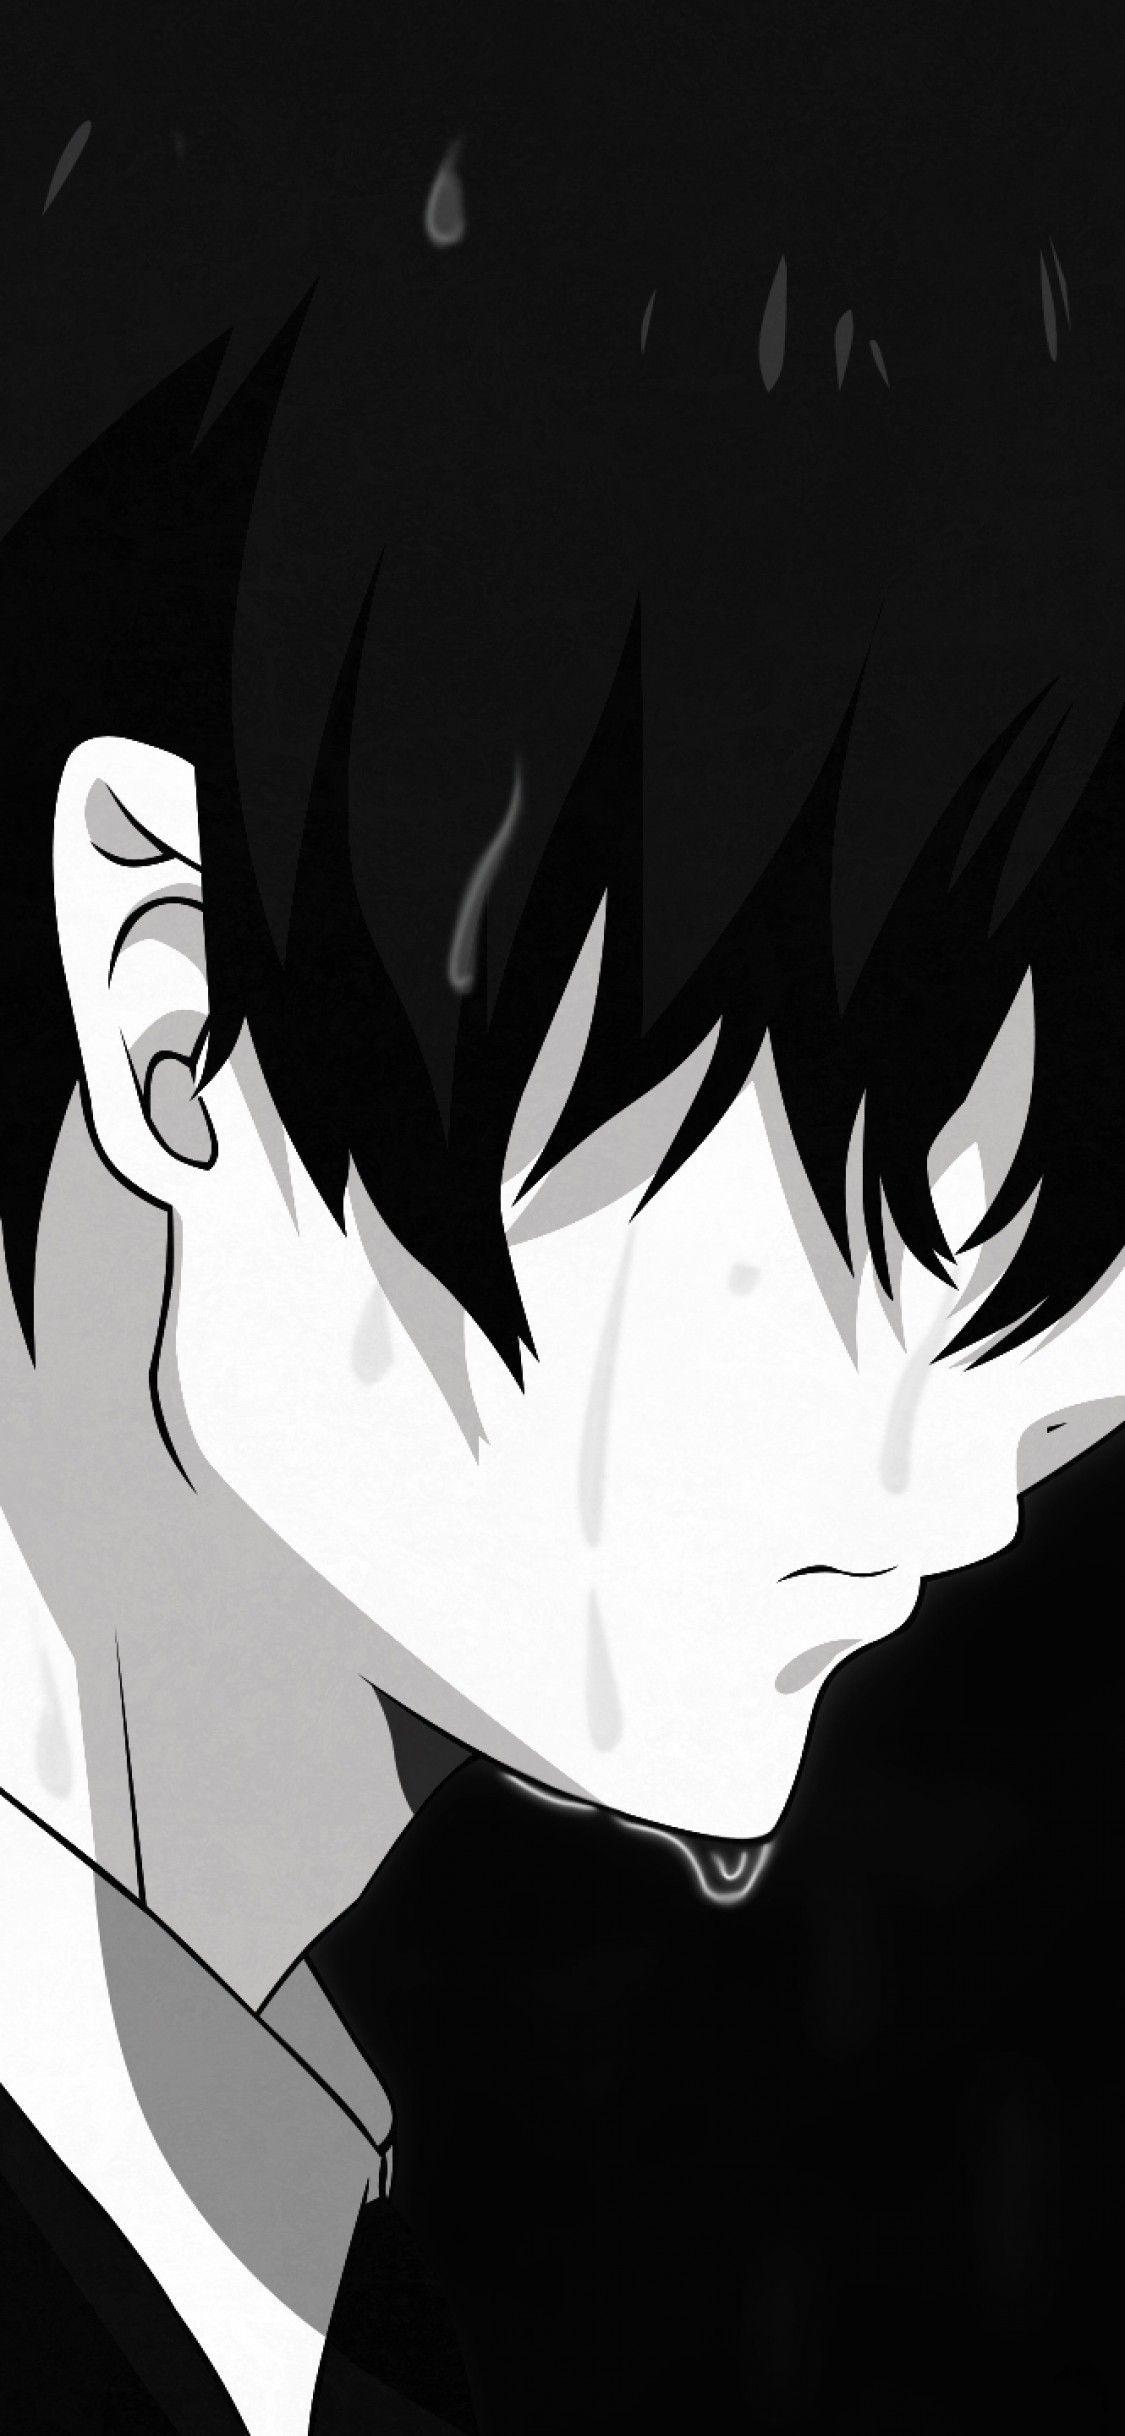 Anime Sad Black And White Wallpapers